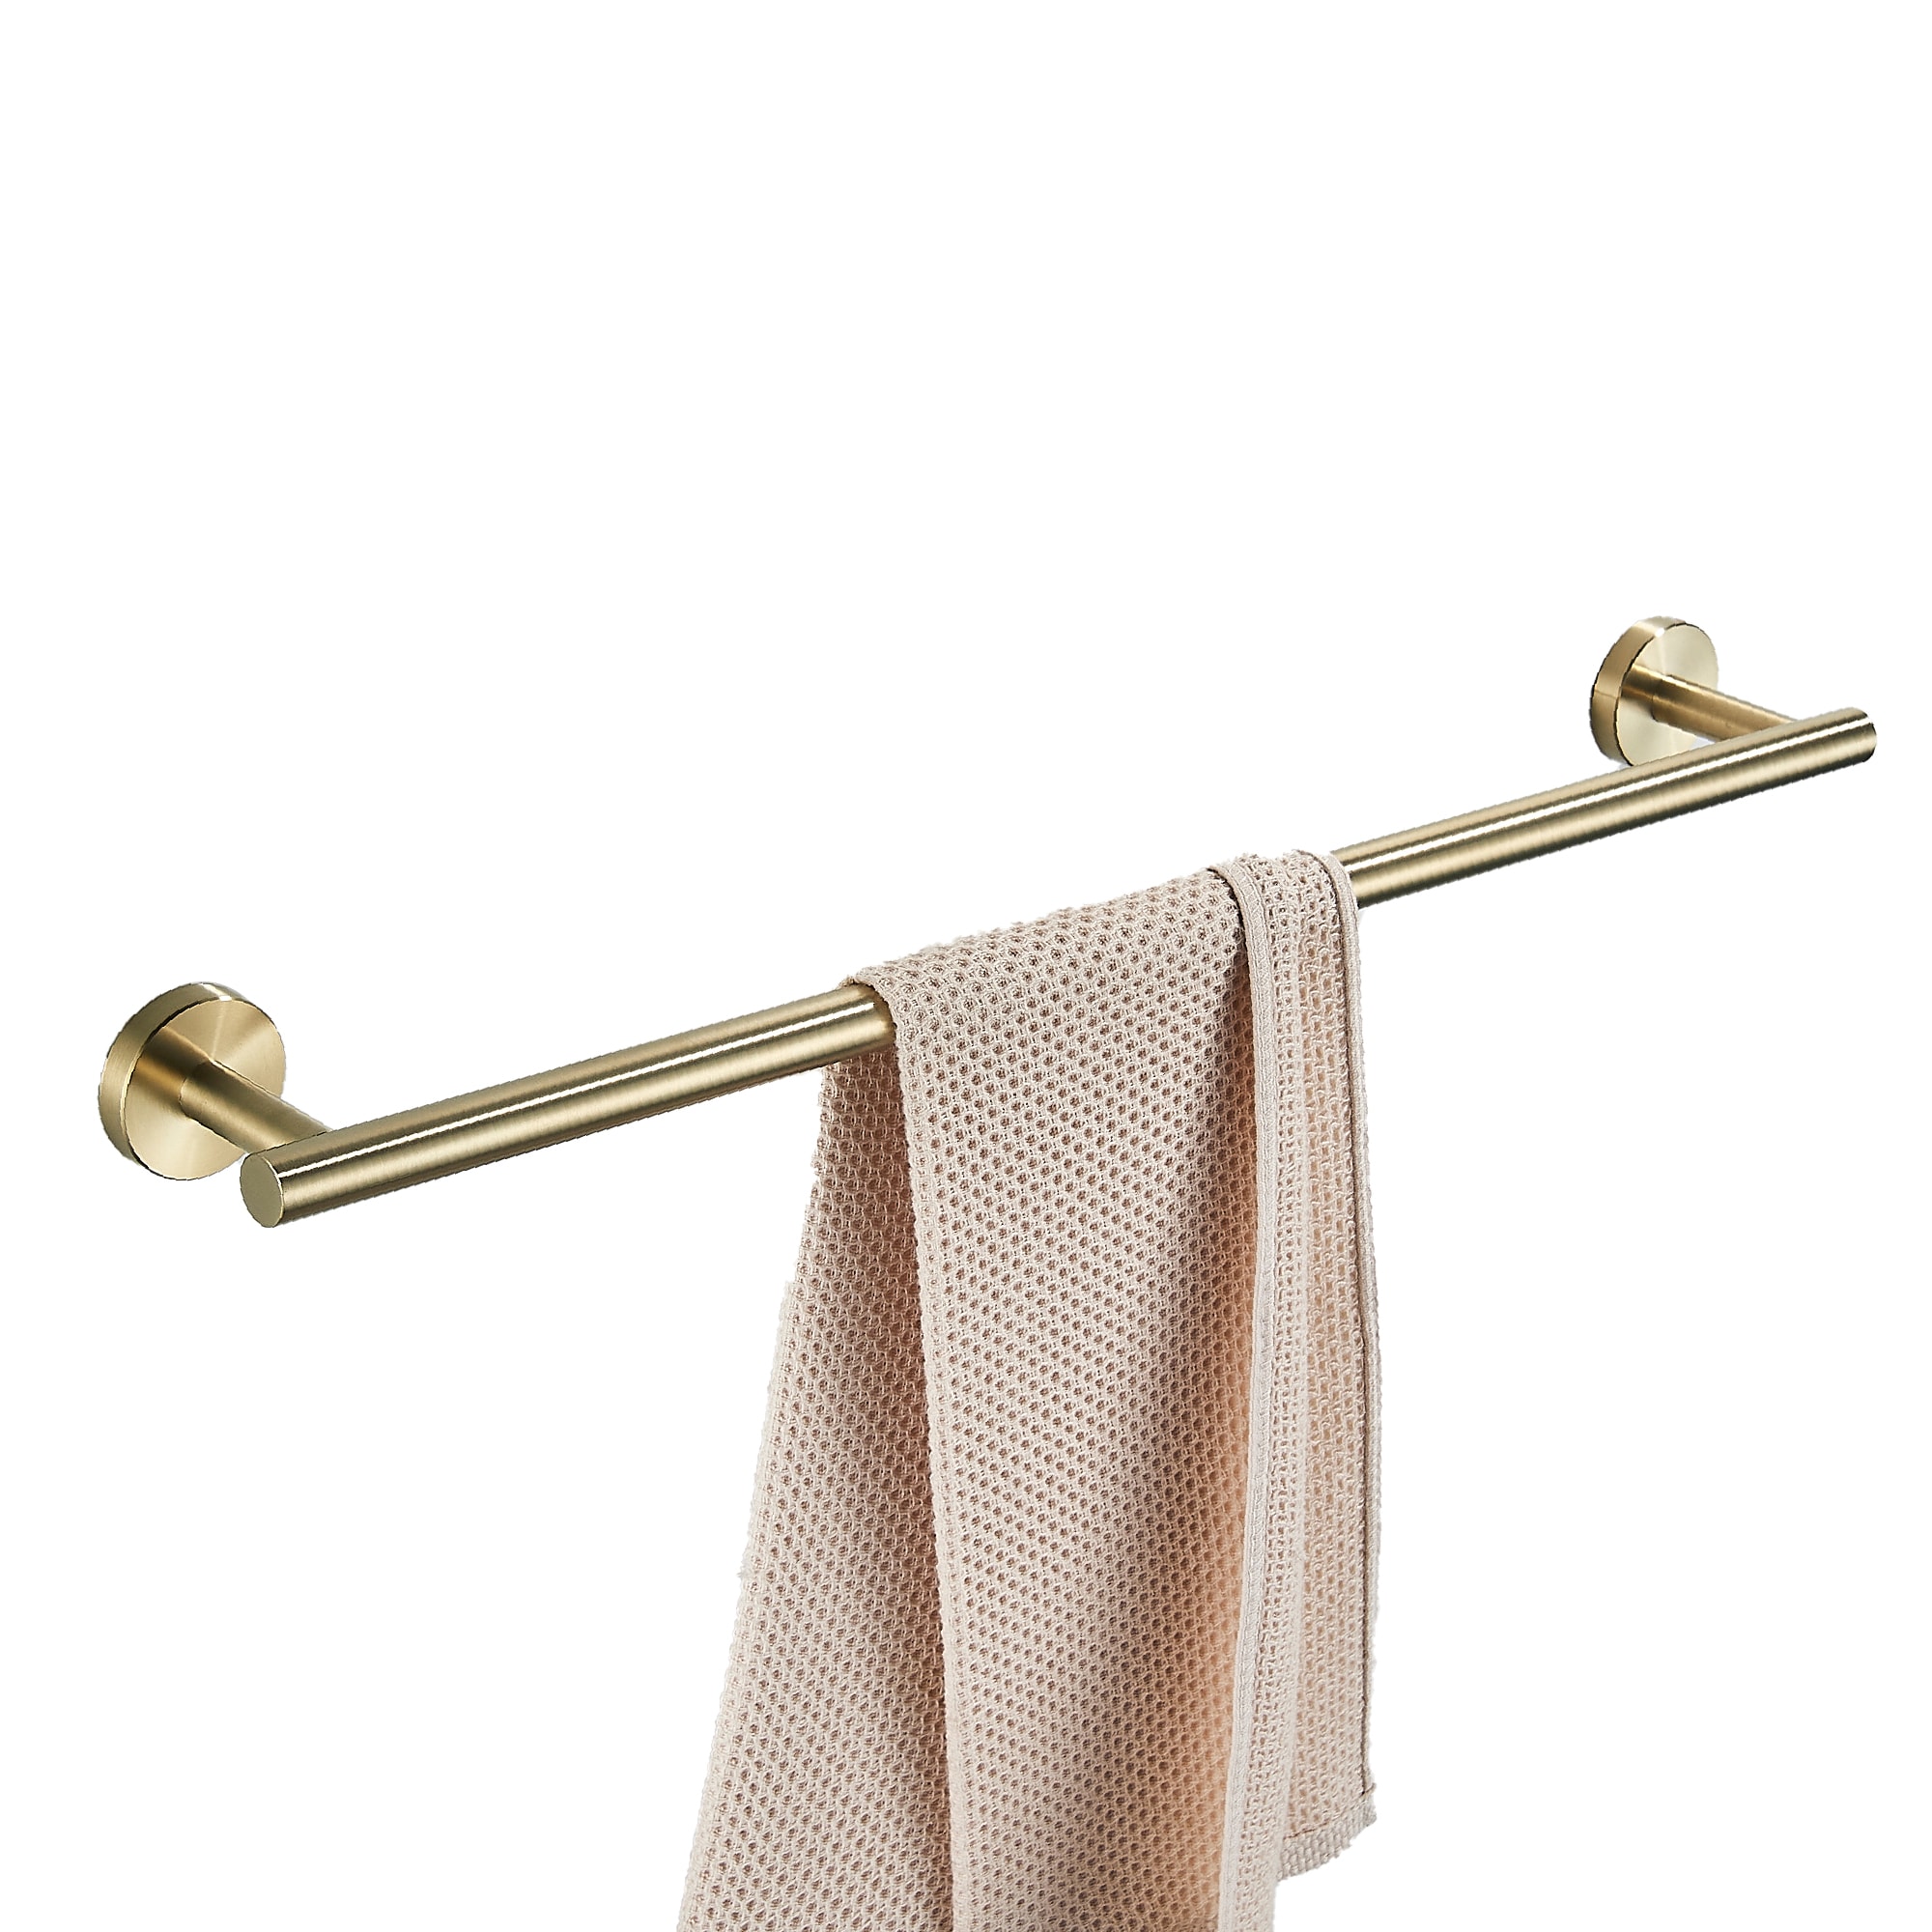 Gold Color Brass Single Towel Bar Towel Rack Bathroom Wall Mounted Towel  Holder